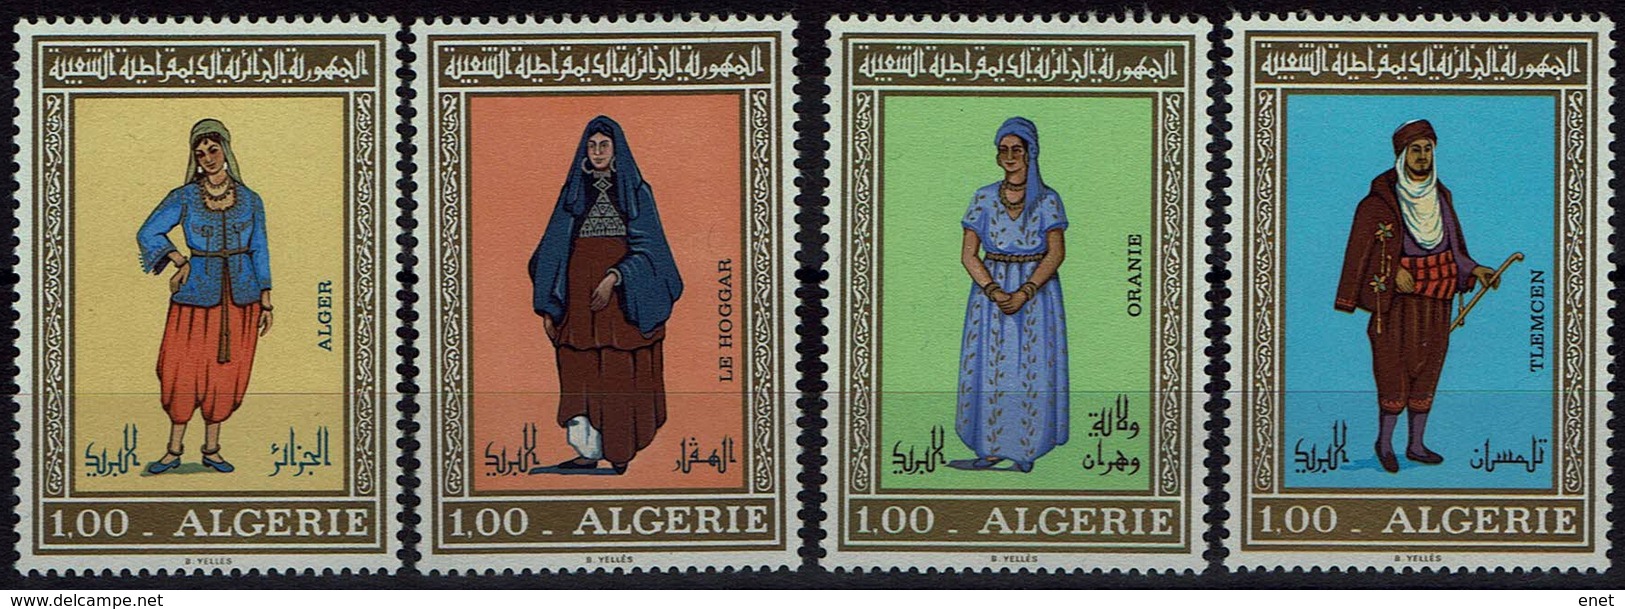 Algerie Algerien 1975 - Trachten  Folf Costume - MiNr 644-647 - Kostüme